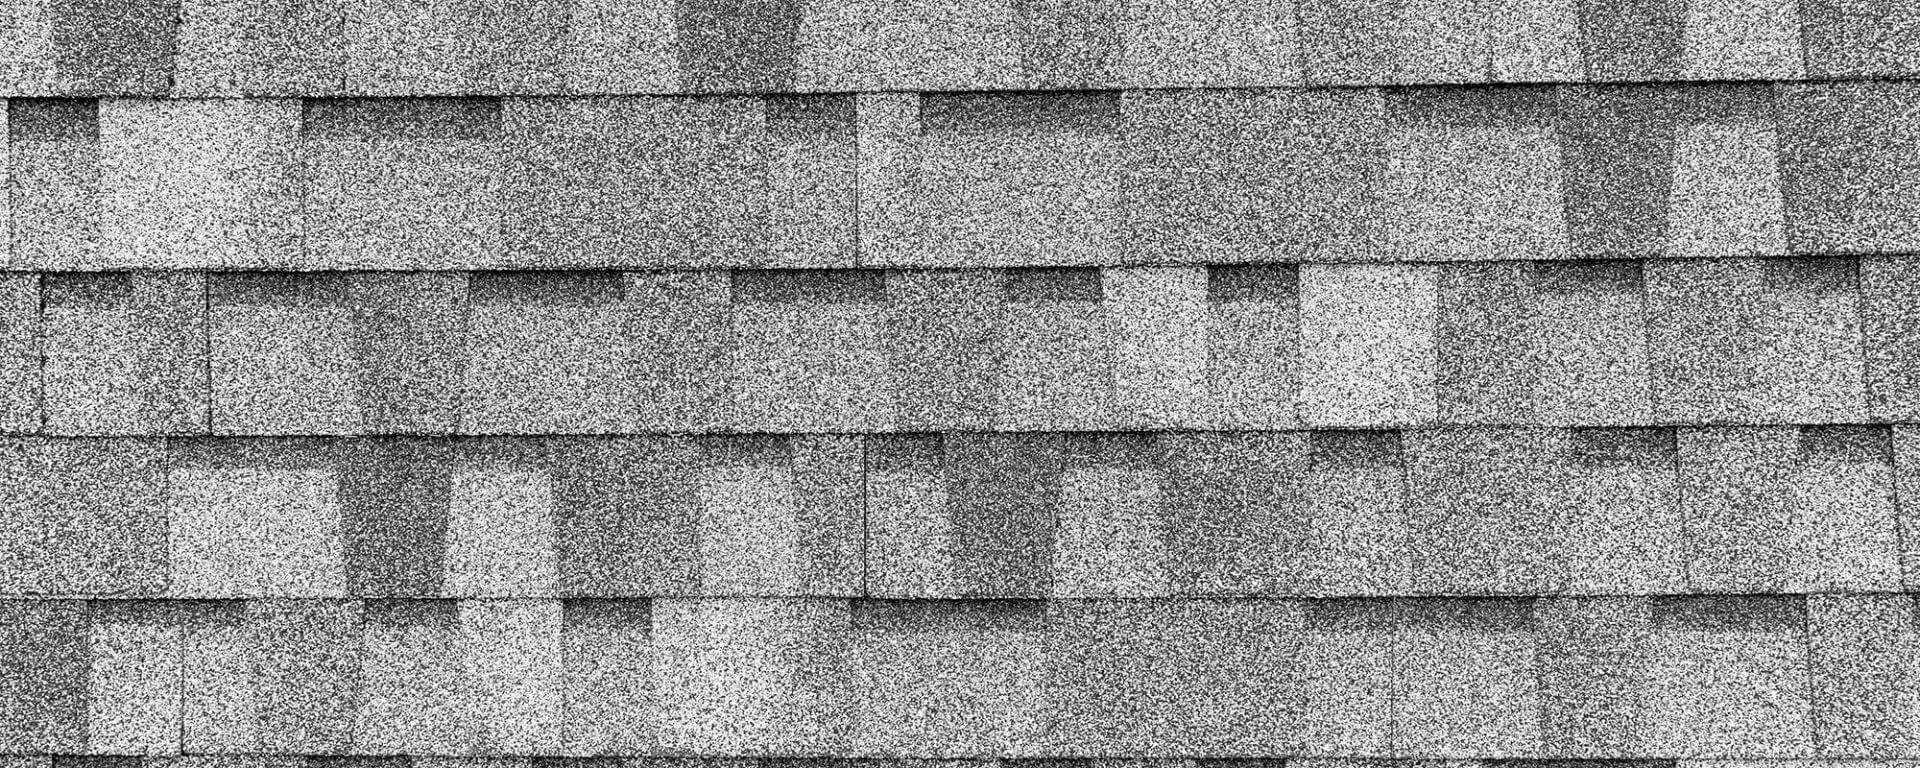 A grey speckled tiled roof